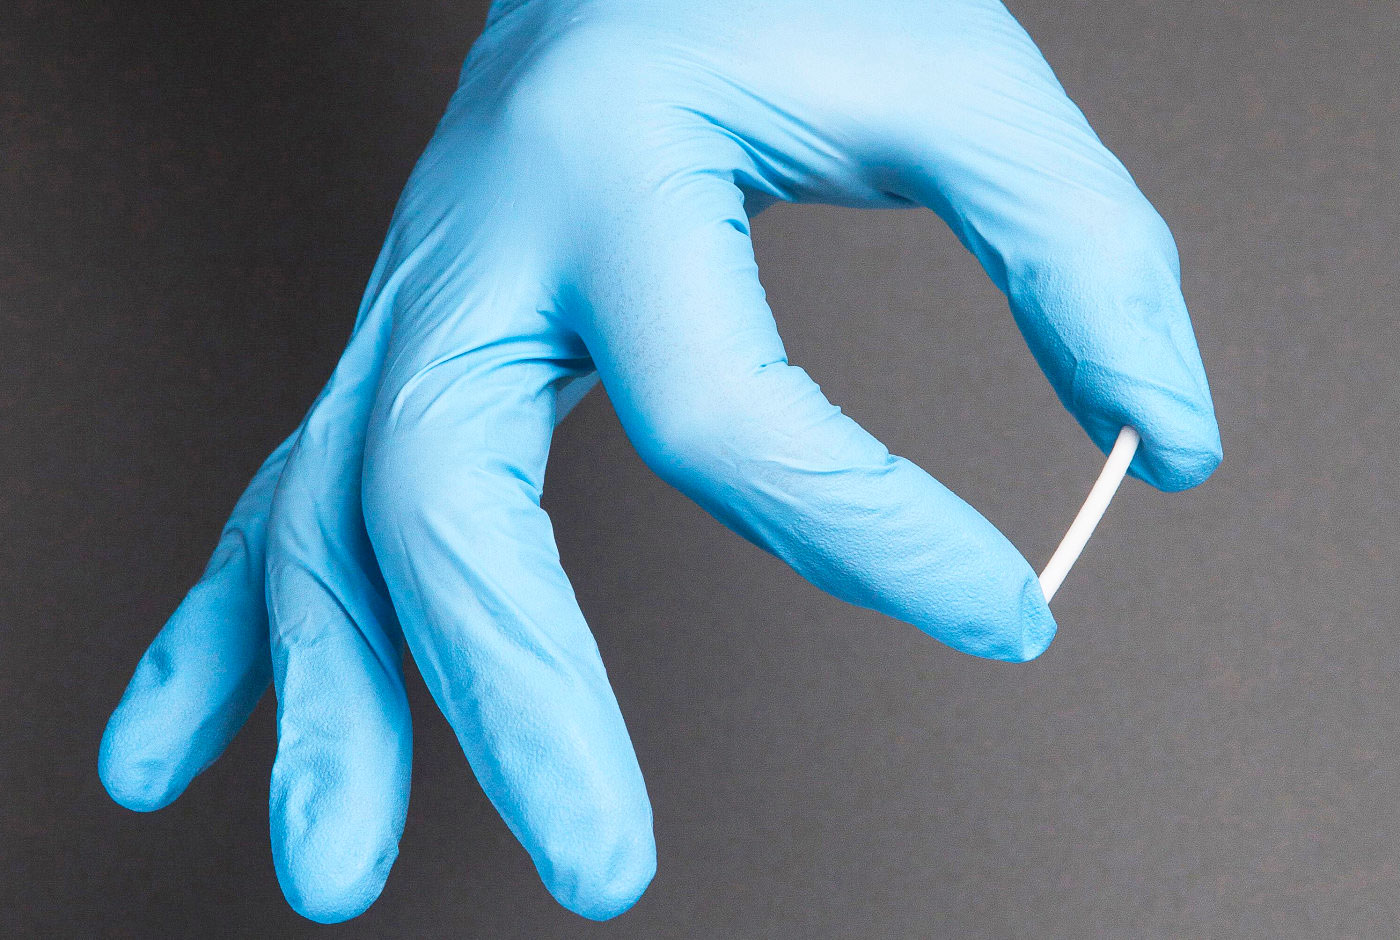 FDA OKs first implant treatment for opioid addiction